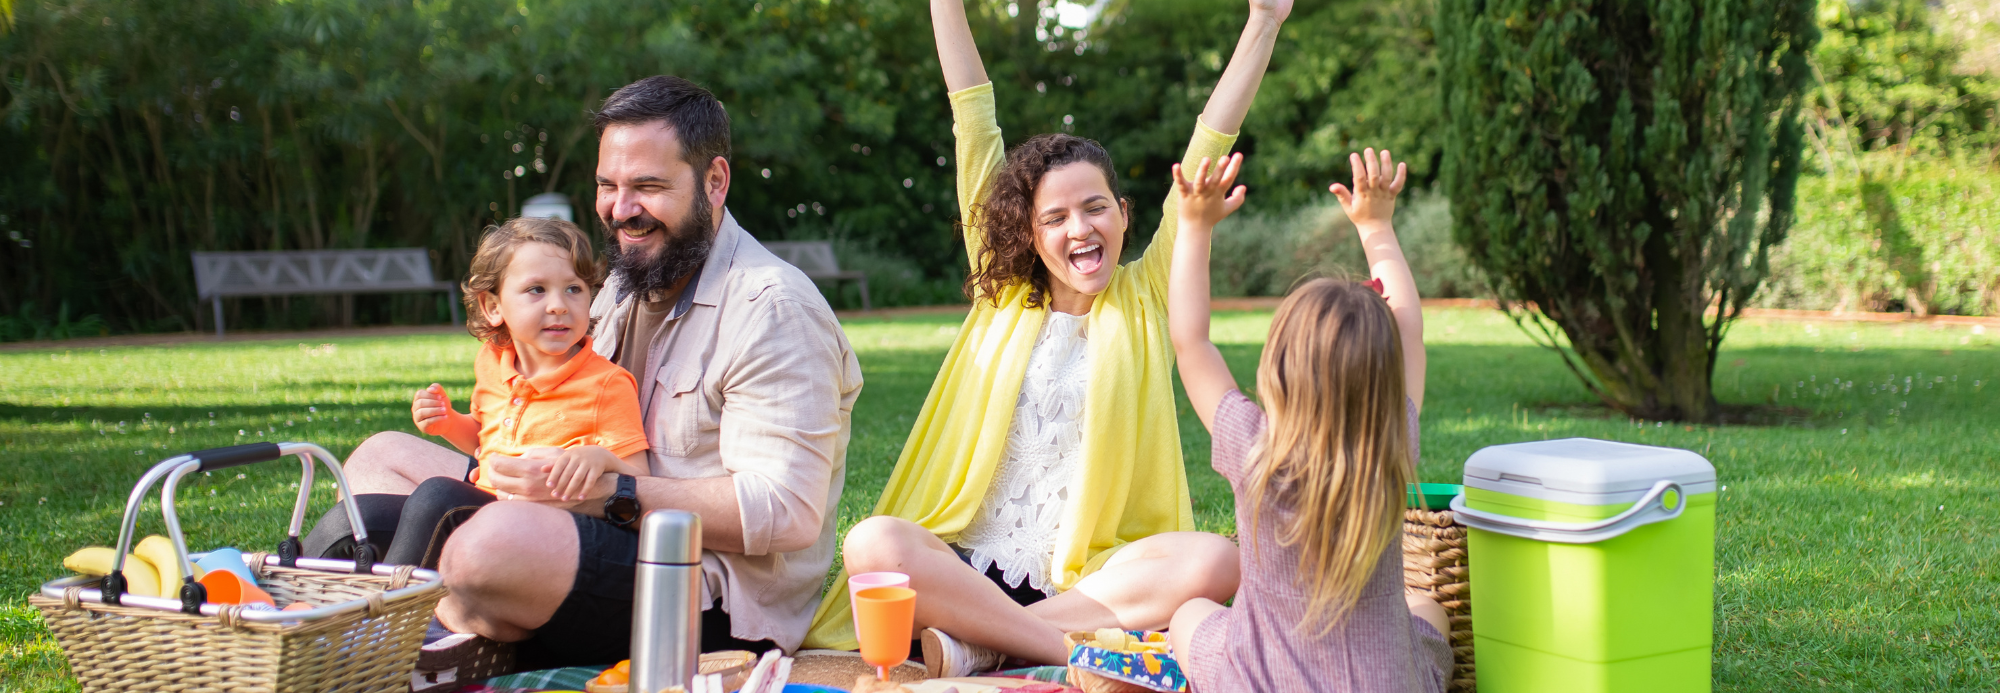 Family having fun at a picnic together.